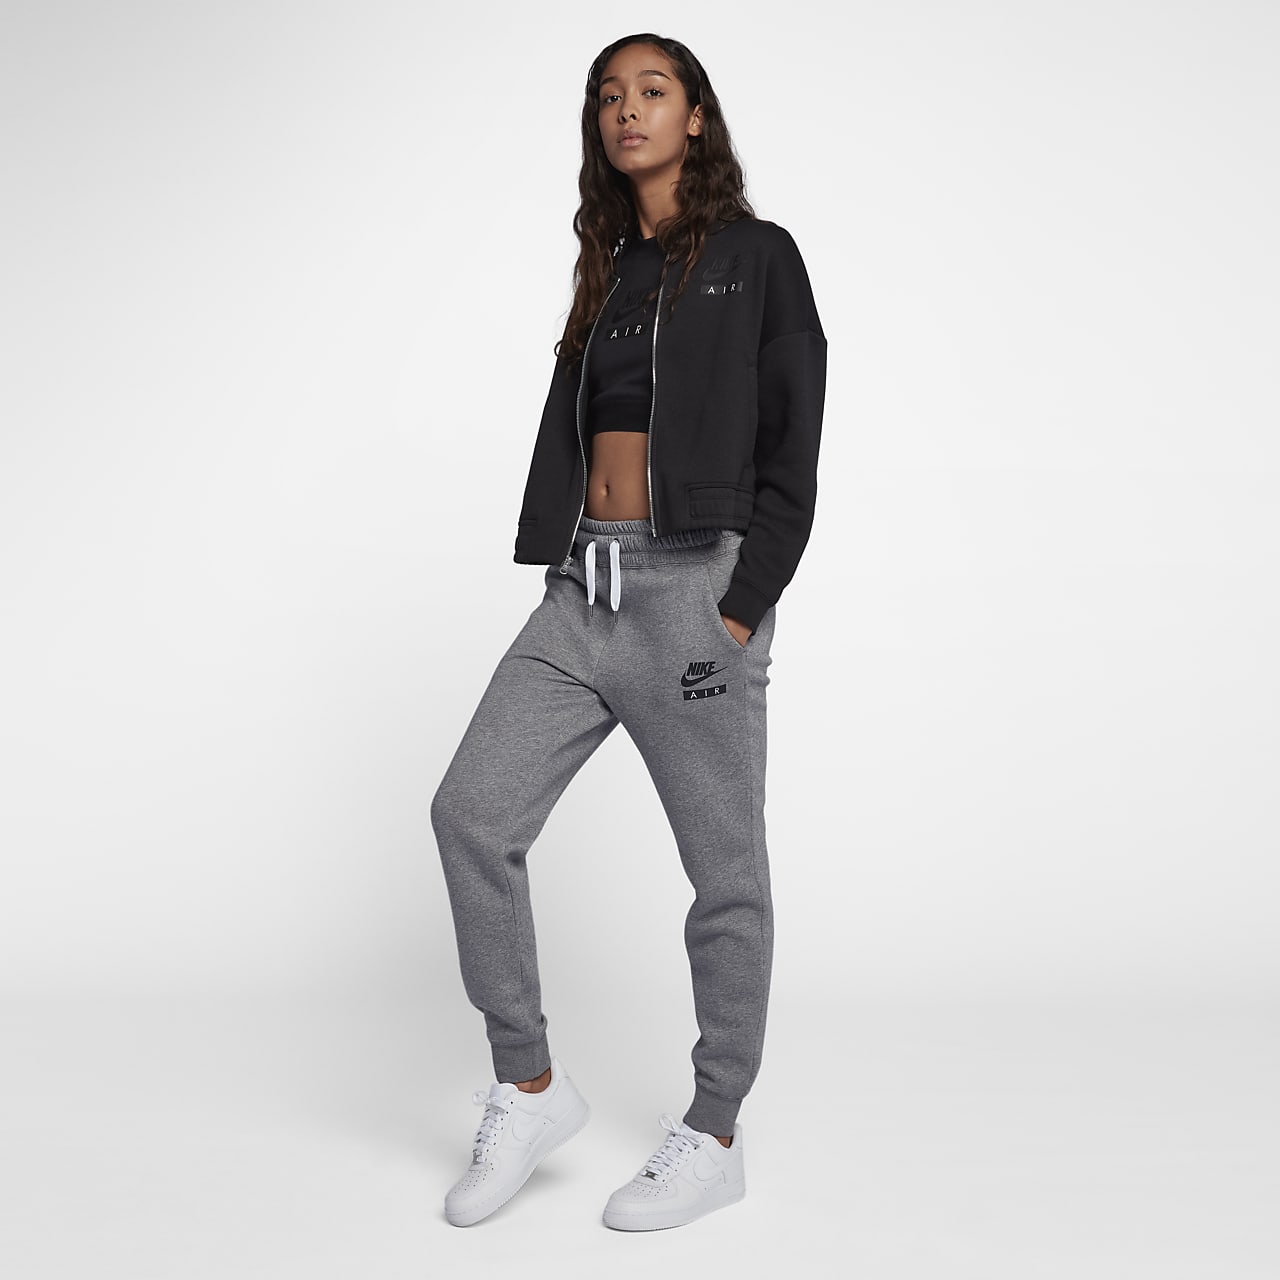 Pantalon Nike Air pour Femme